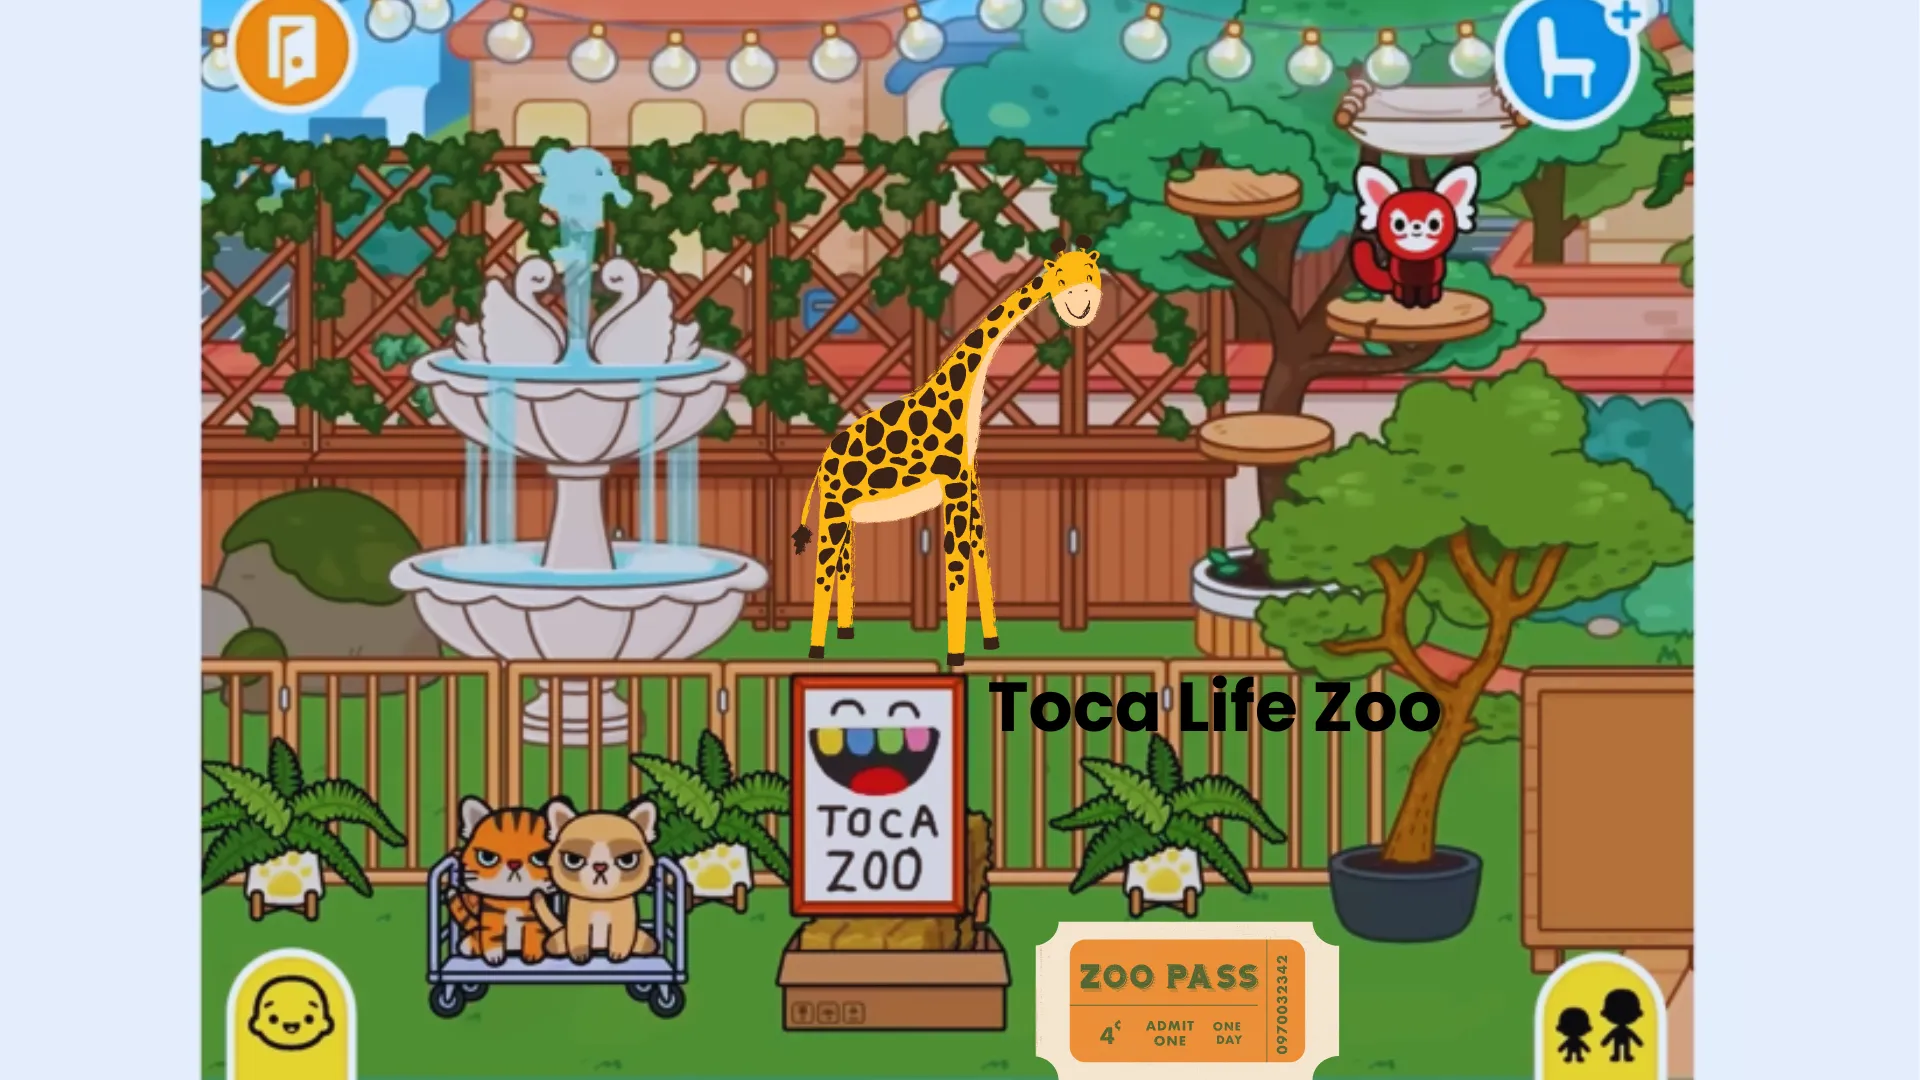 Experience wildlife adventures in Toca Life Zoo